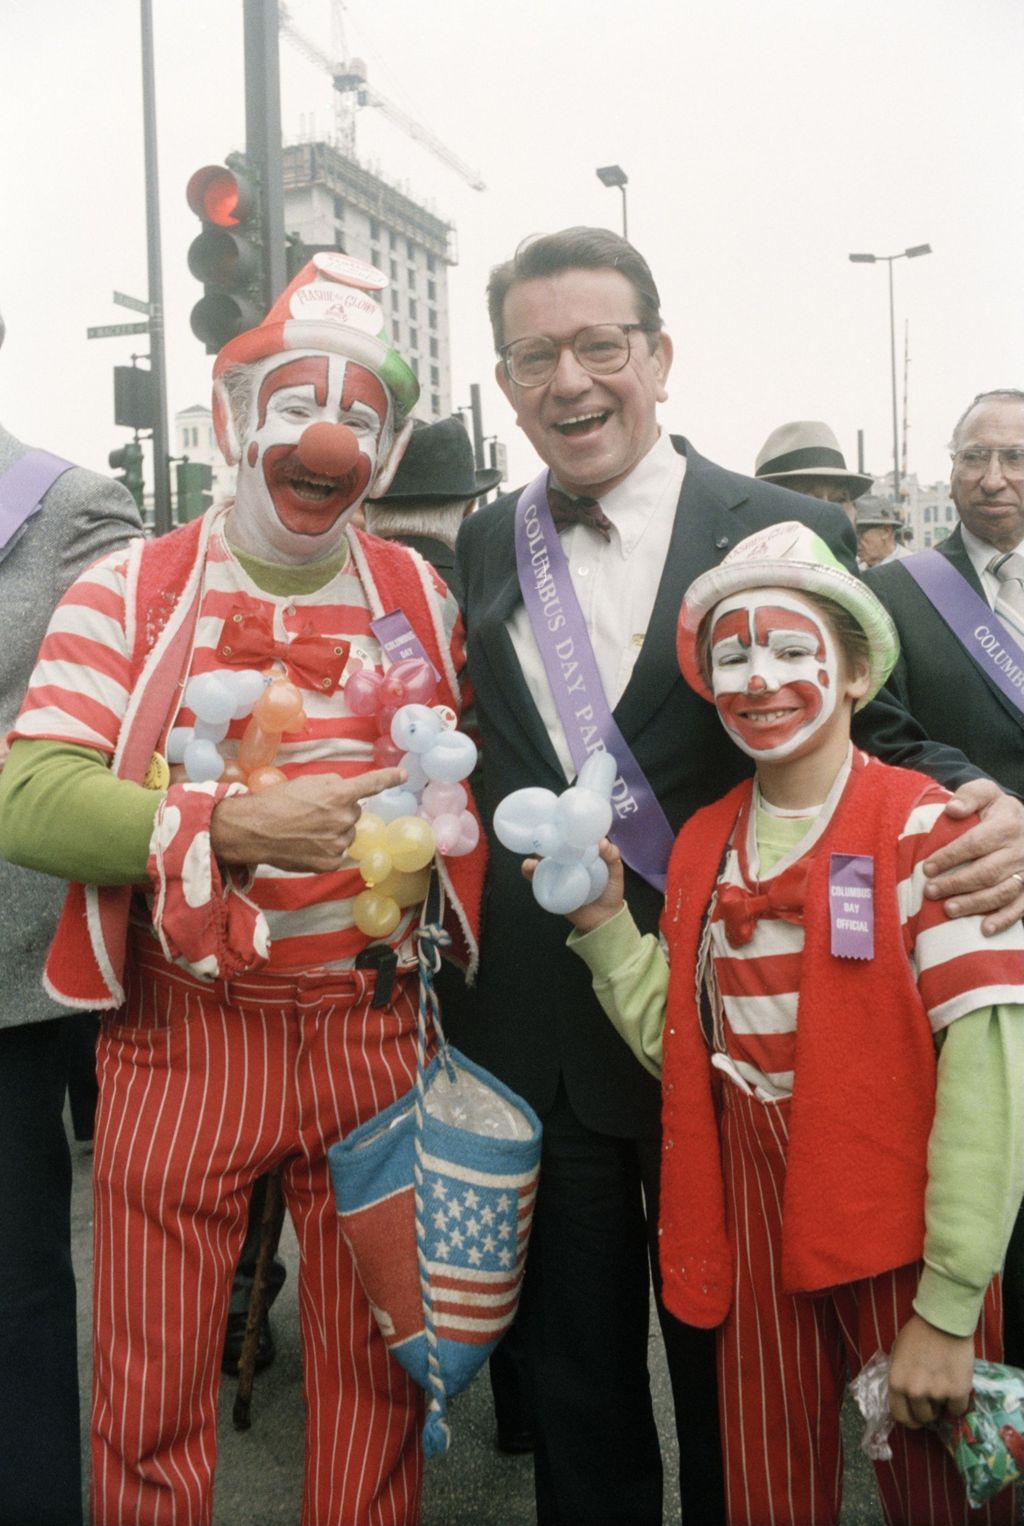 Miniature of Flashy the Clown and Senator Paul Simon